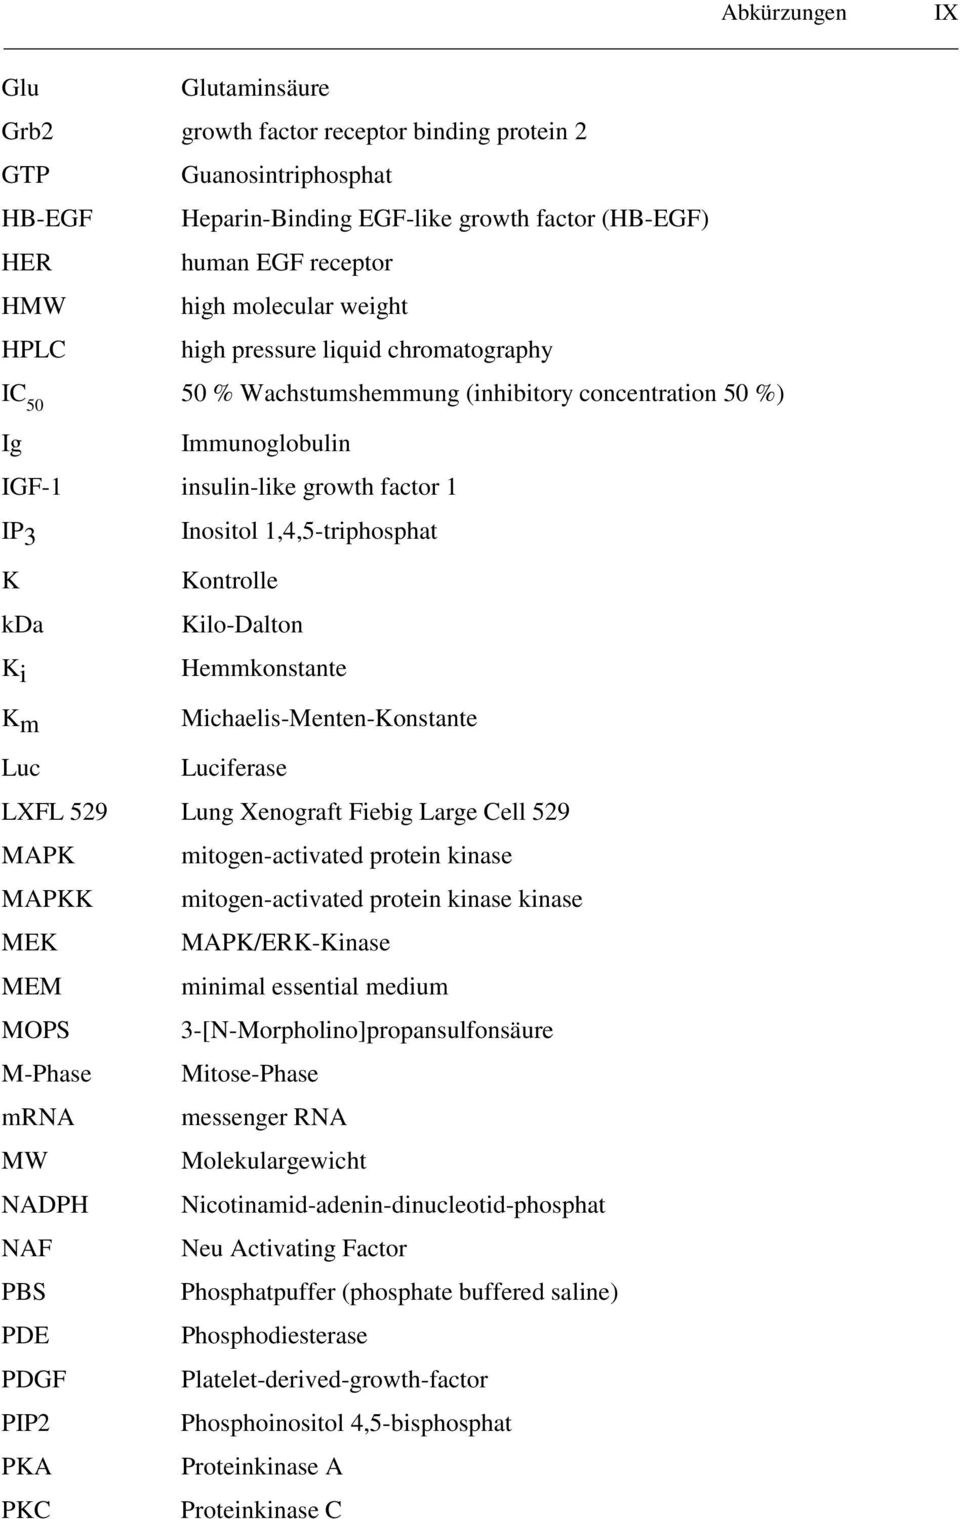 K i K m Kontrolle Kilo-Dalton Hemmkonstante Michaelis-Menten-Konstante Luc Luciferase LXFL 529 Lung Xenograft Fiebig Large Cell 529 MAPK mitogen-activated protein kinase MAPKK mitogen-activated